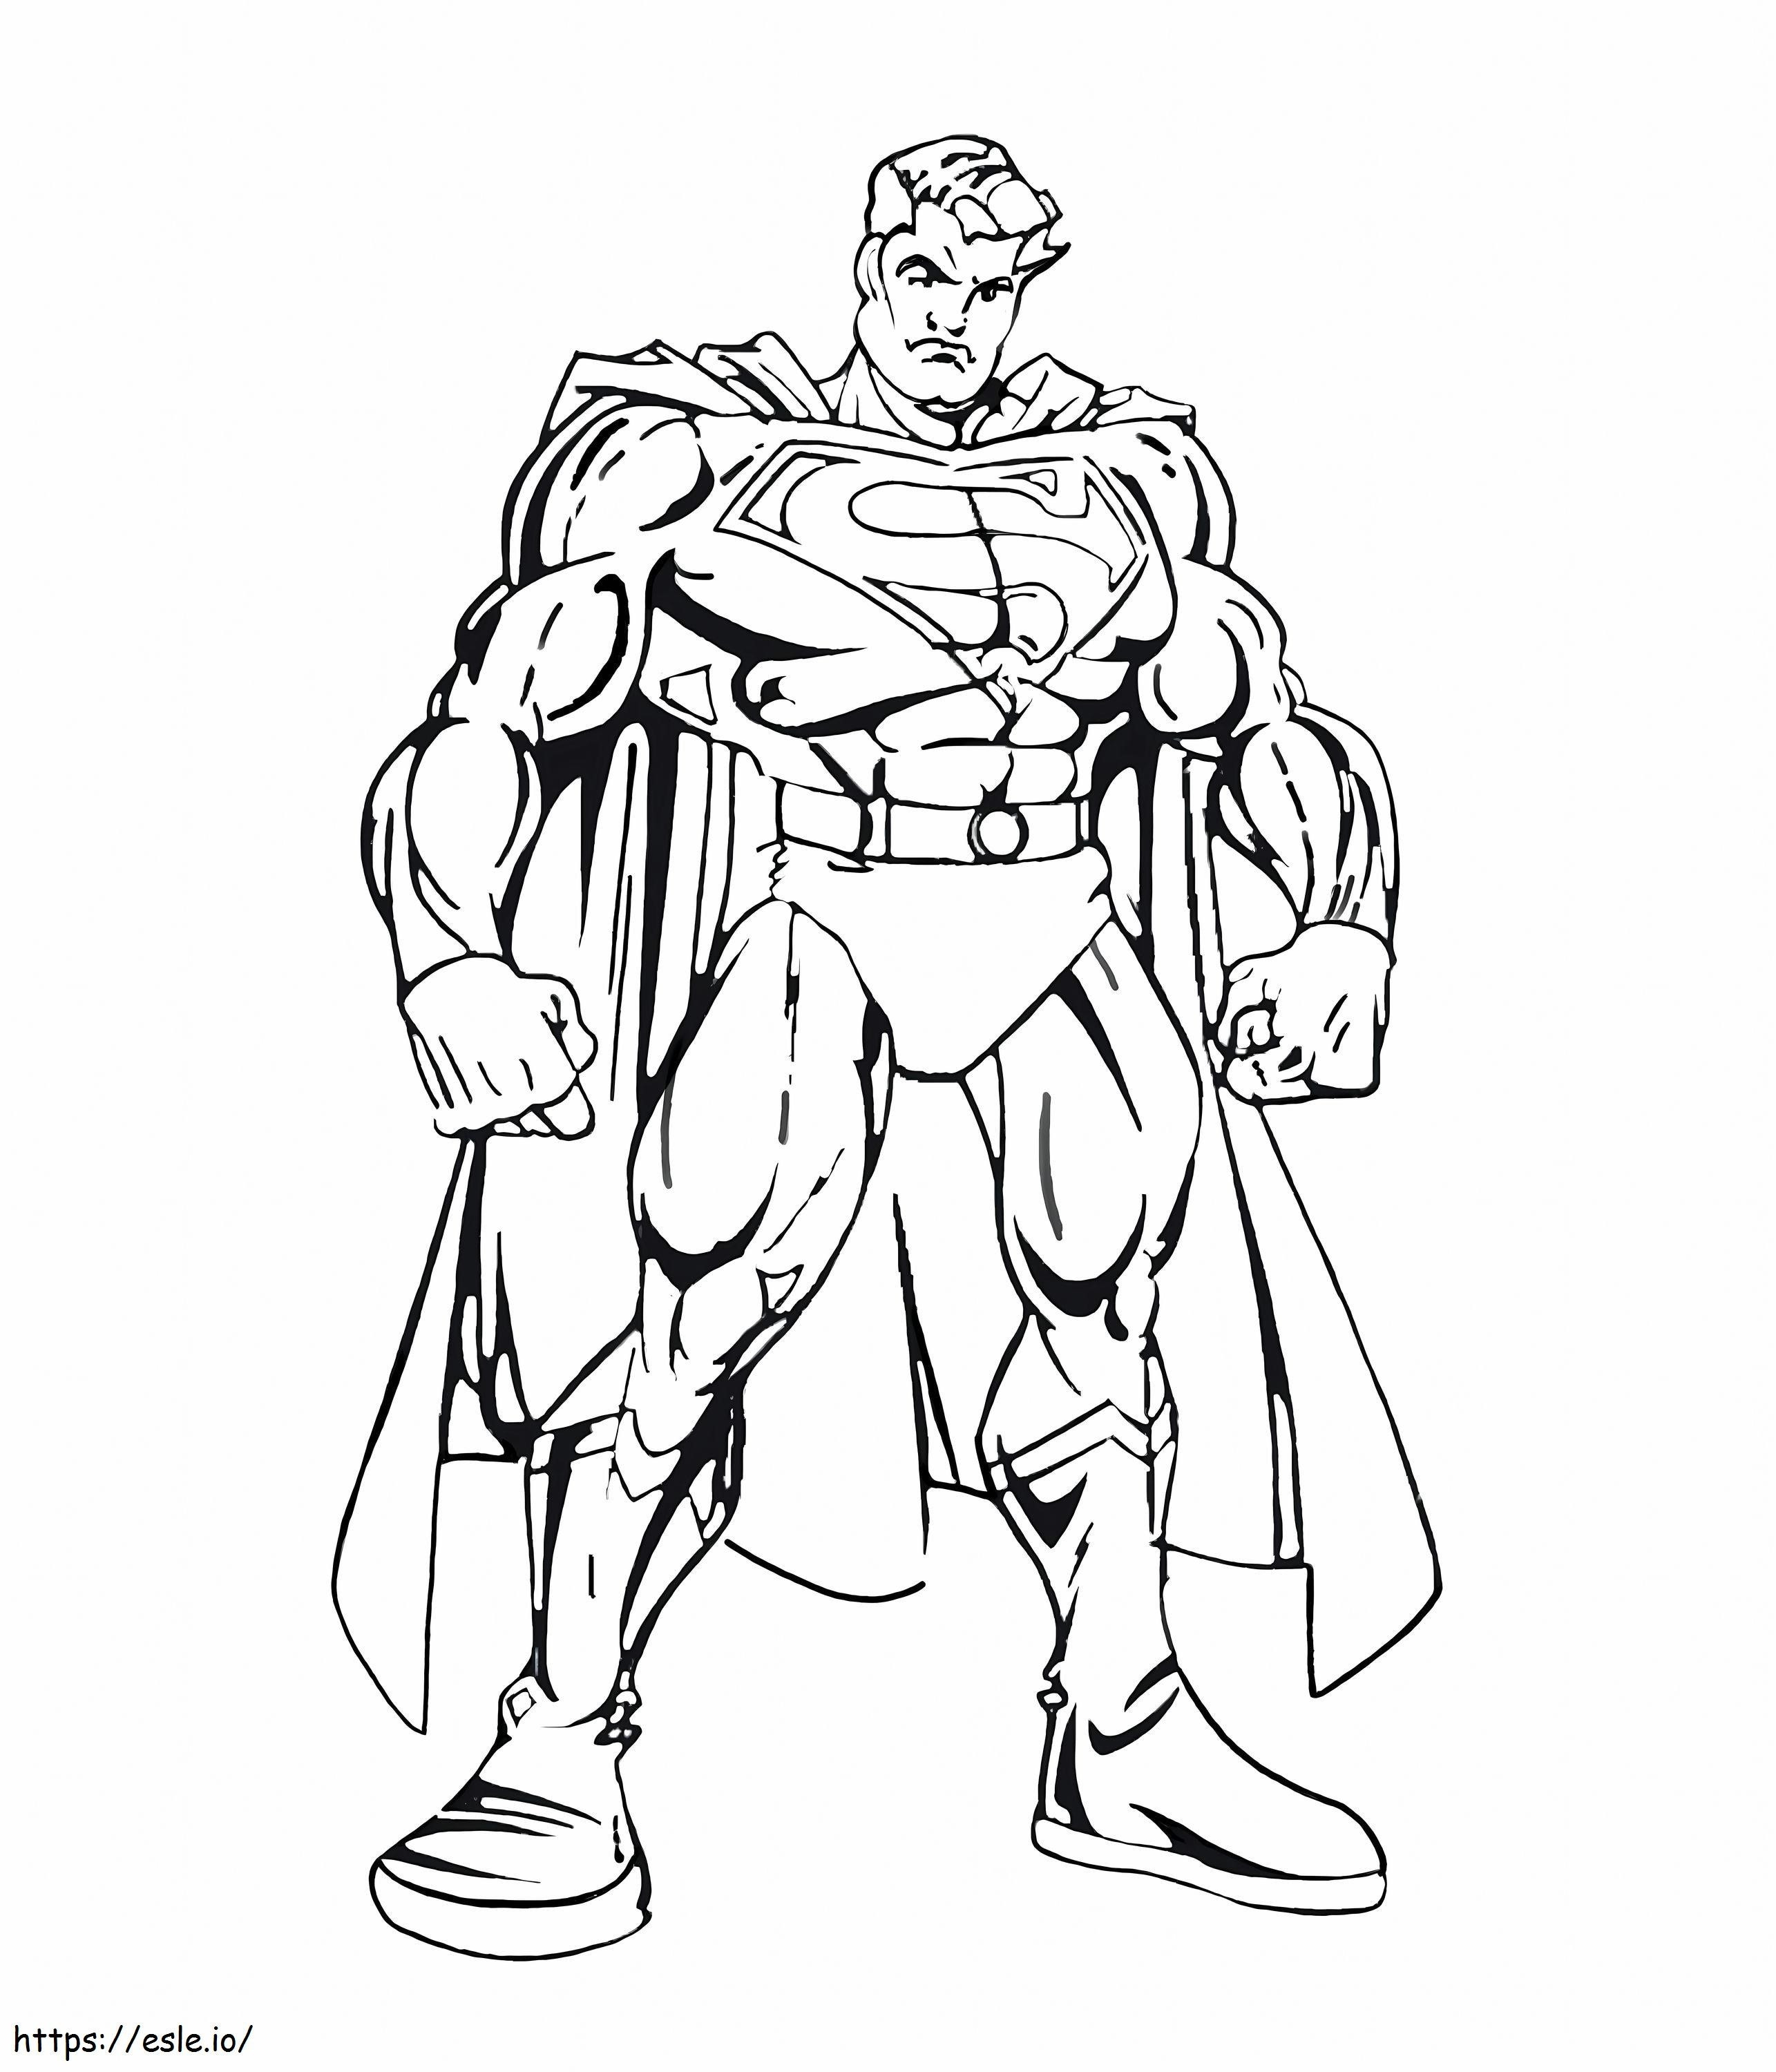 Dibujar a Superman fuerte para colorear